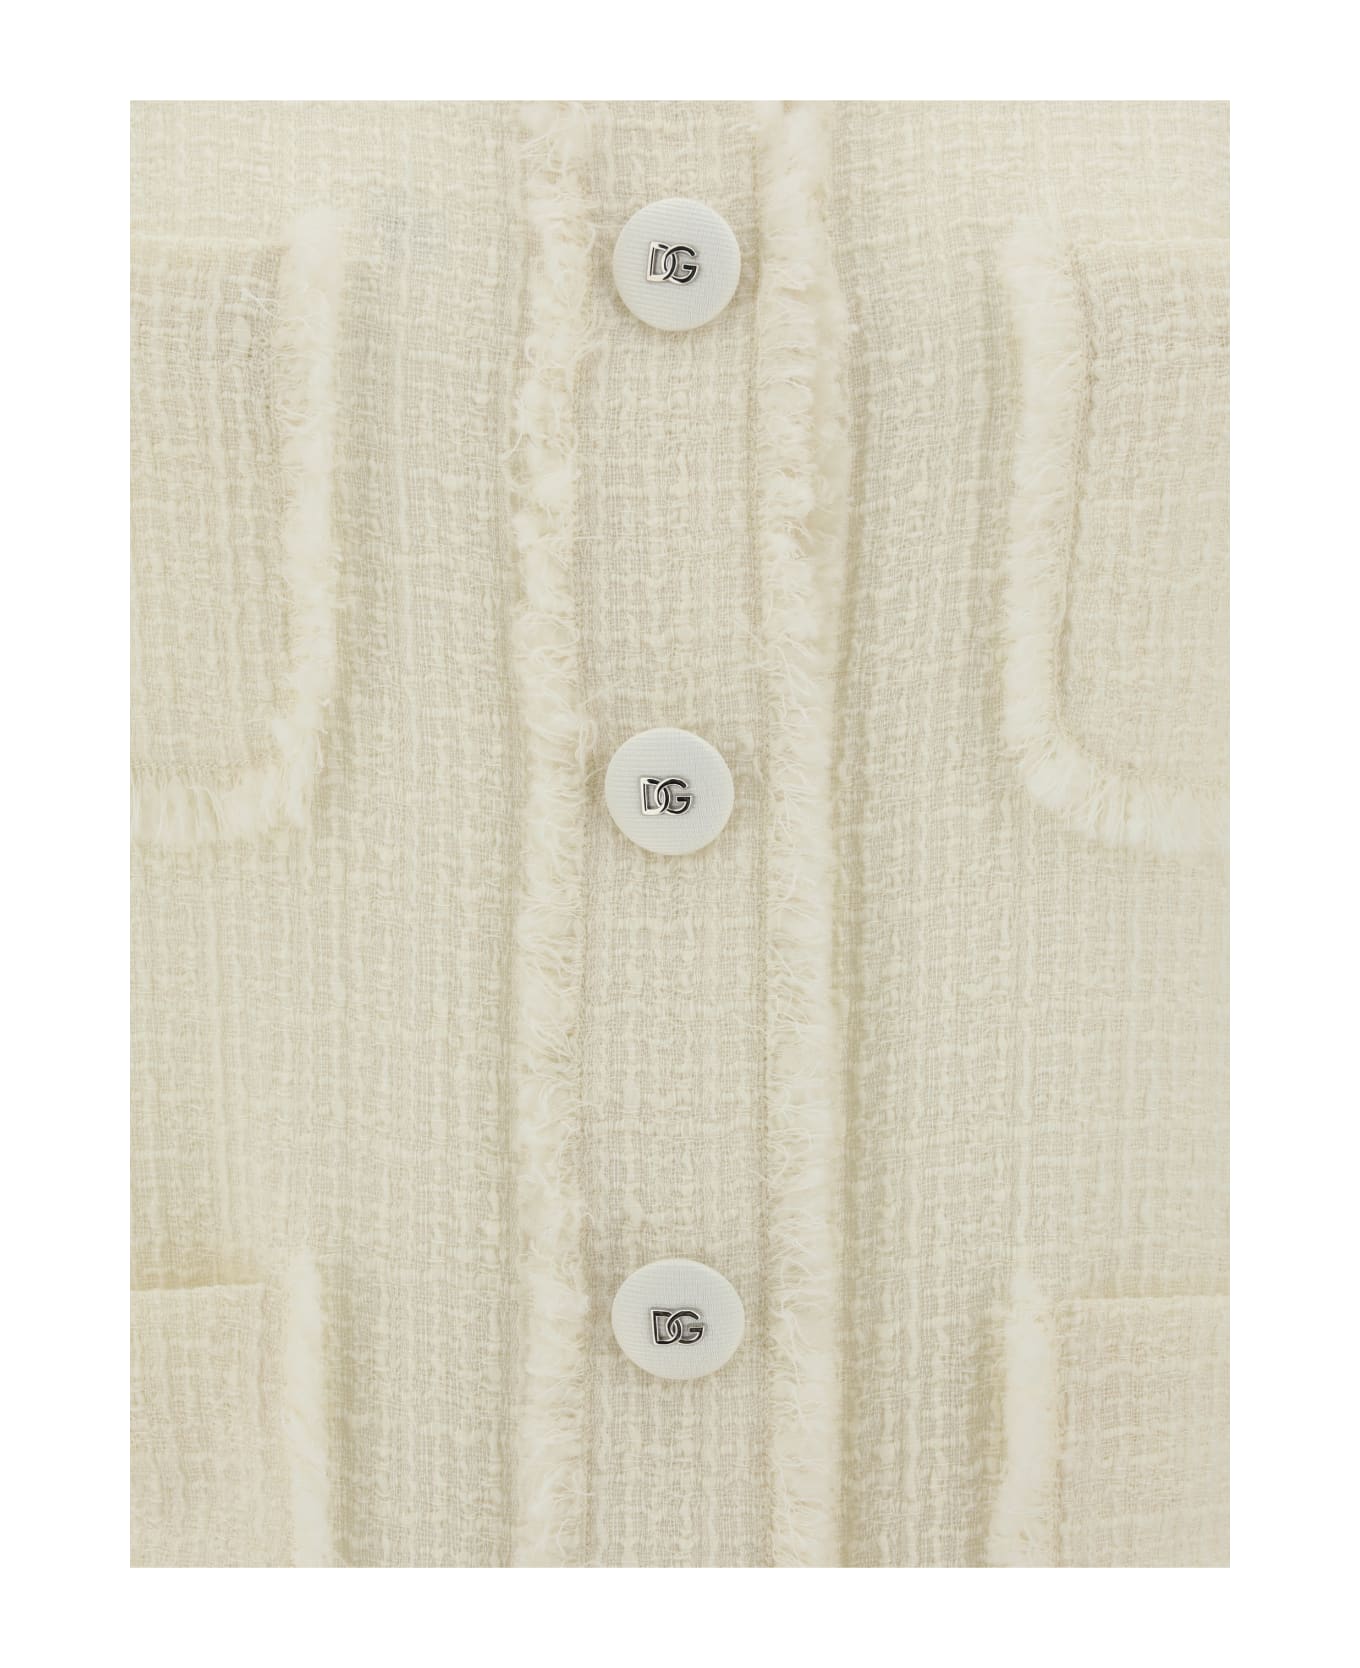 Dolce & Gabbana Tweed Jacket - Bianco Panna カーディガン